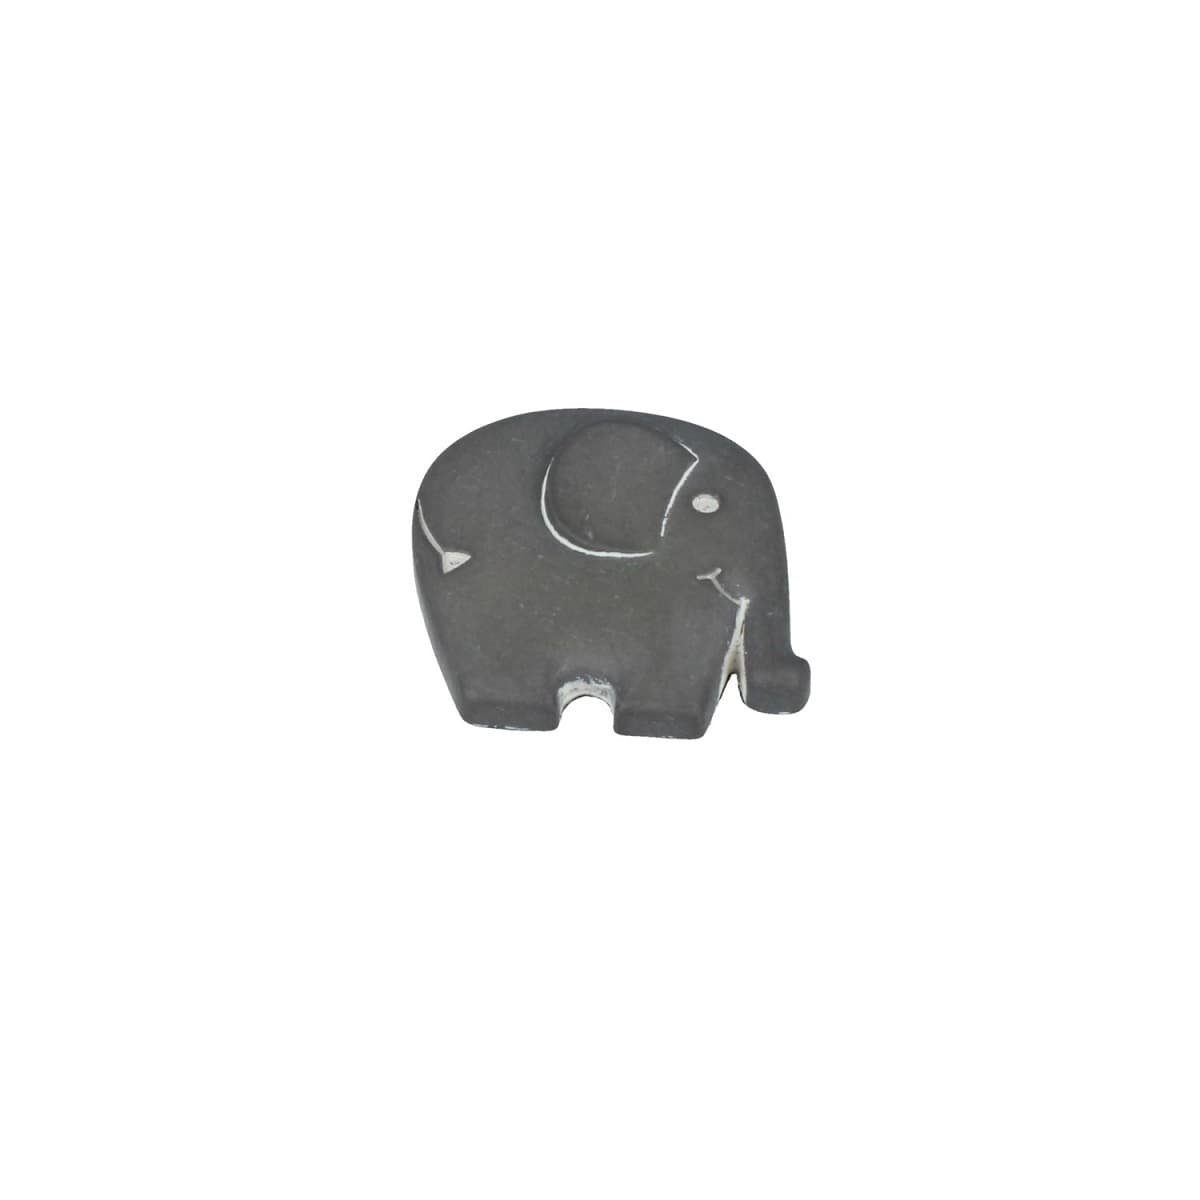 Kinderzimmerknopf Möbelknopf Türbeschlag Elefant Beschläge MS Modell